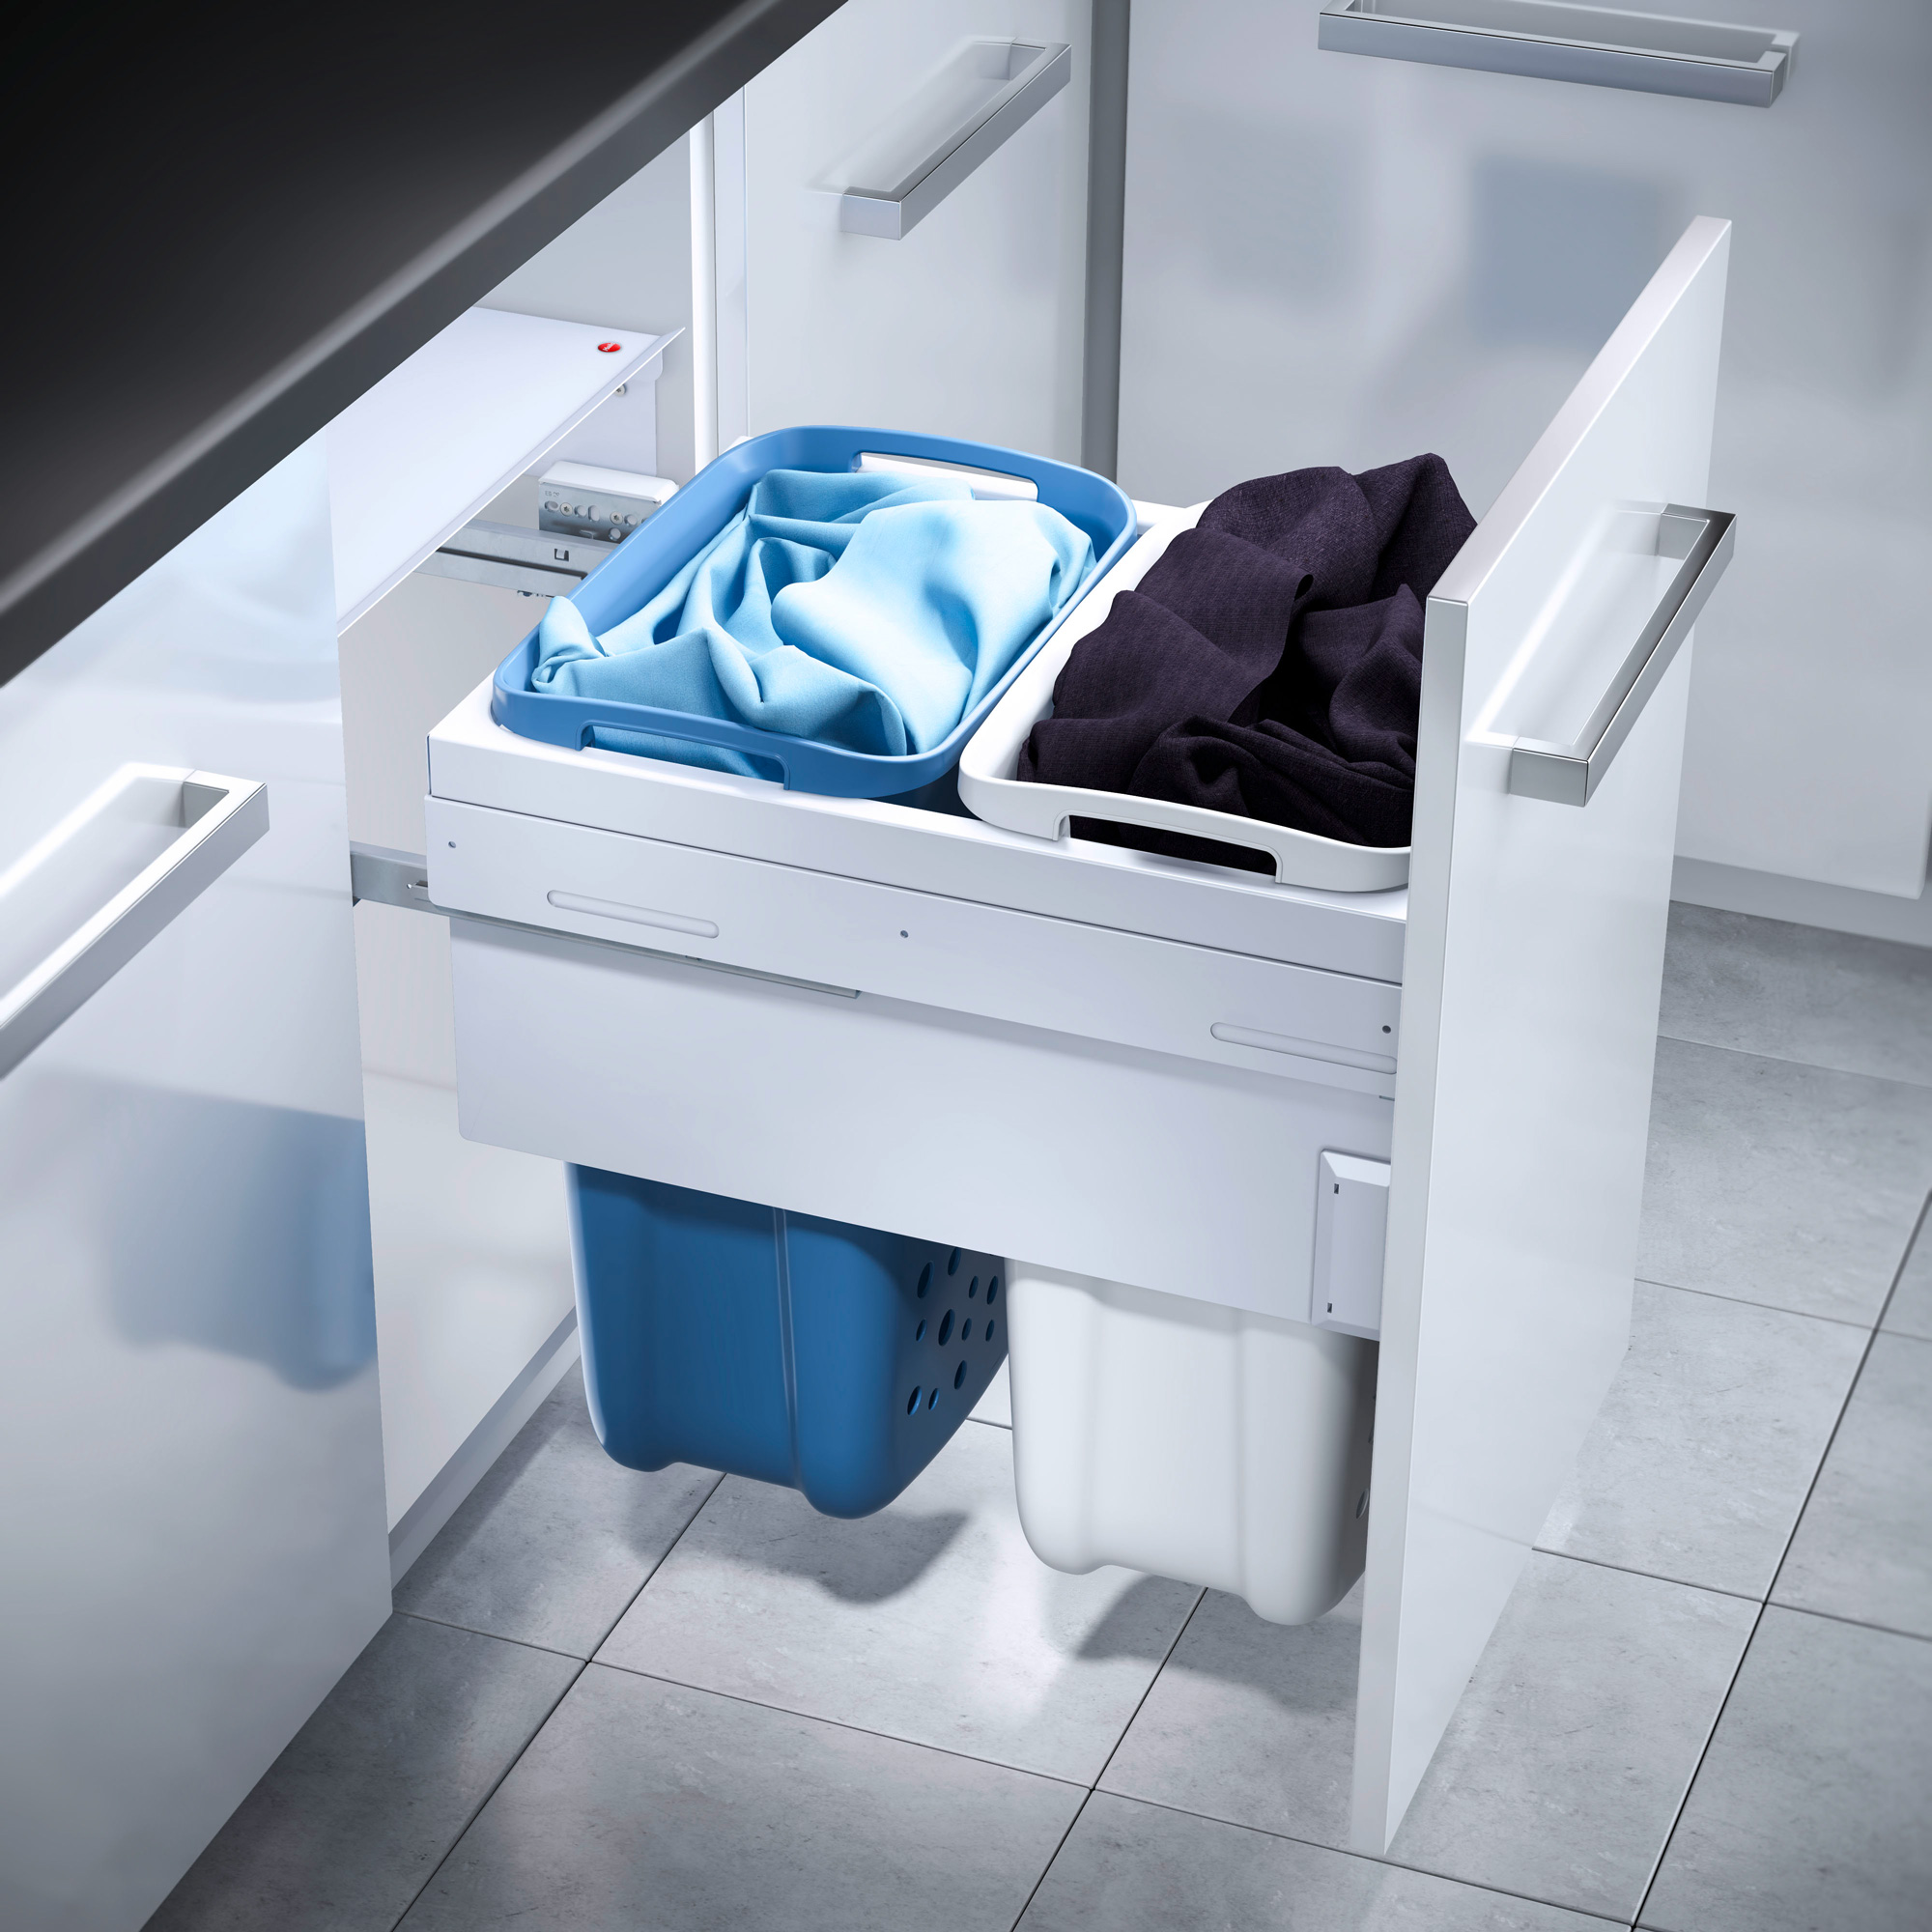 Система хранения белья Laundry-Carrier 50, 2х33л белая рама, 462-468x528x545мм